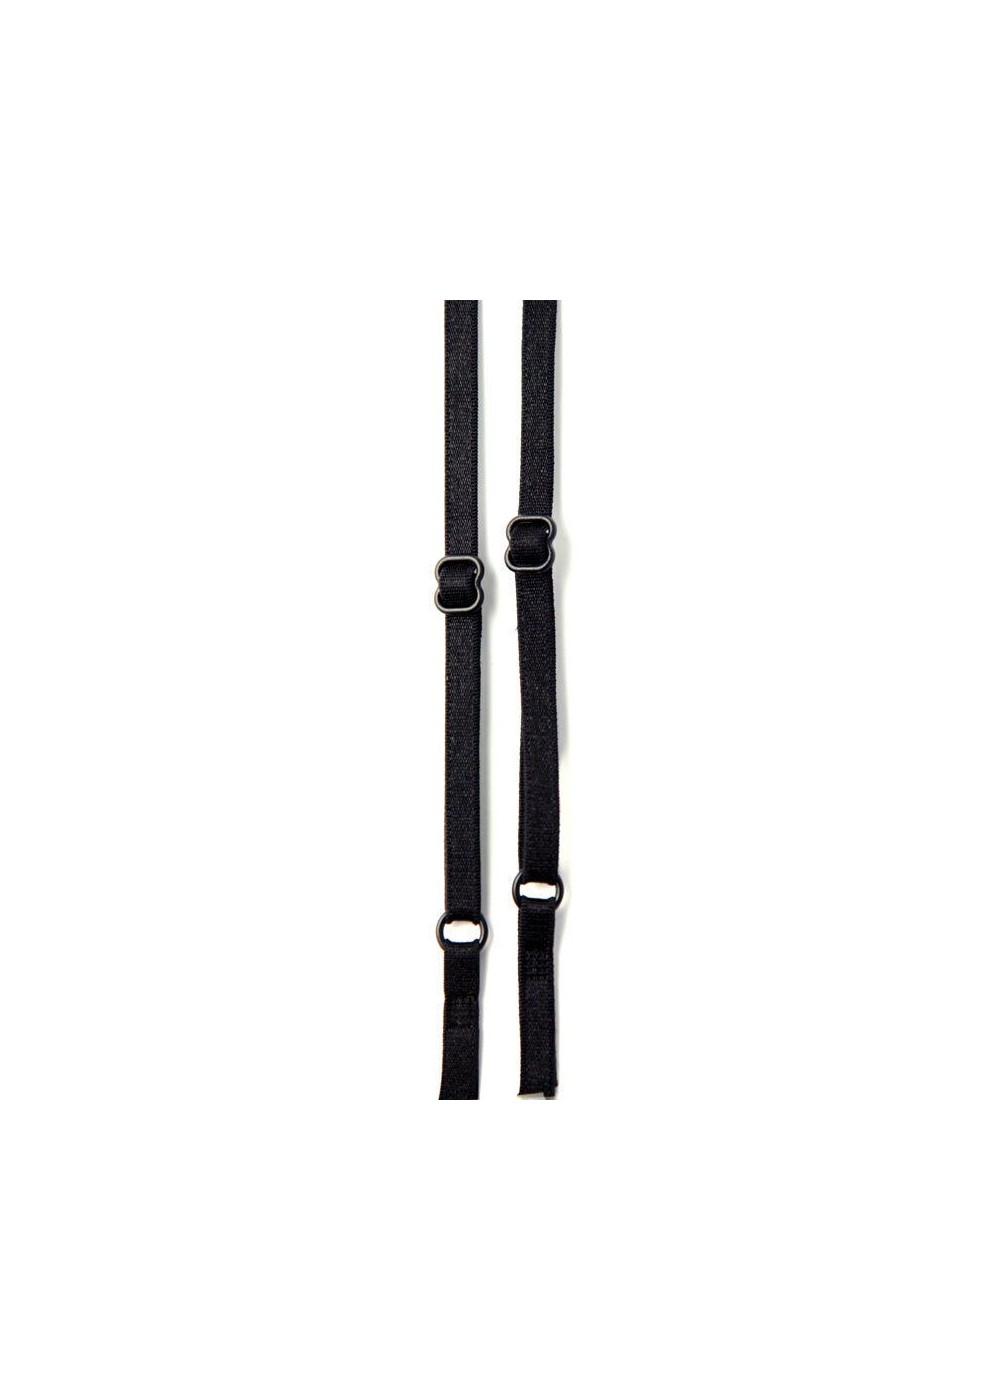 Black Rhinestone Adjustable Bra Straps/shoulder/hooks/dress Strap